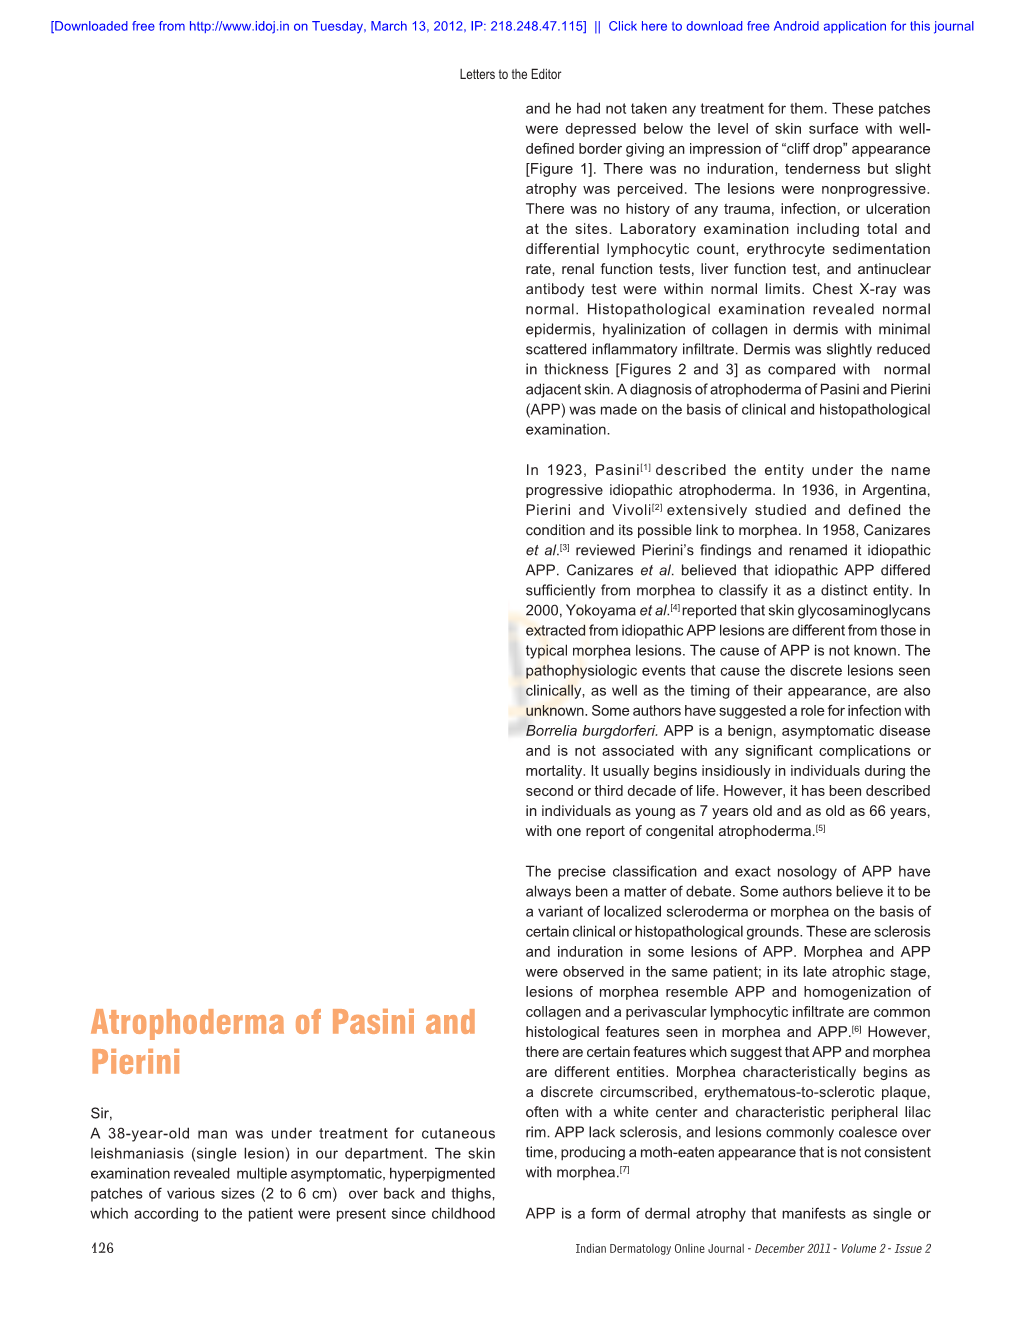 Atrophoderma of Pasini and Pierini Address for Correspondence: Dr